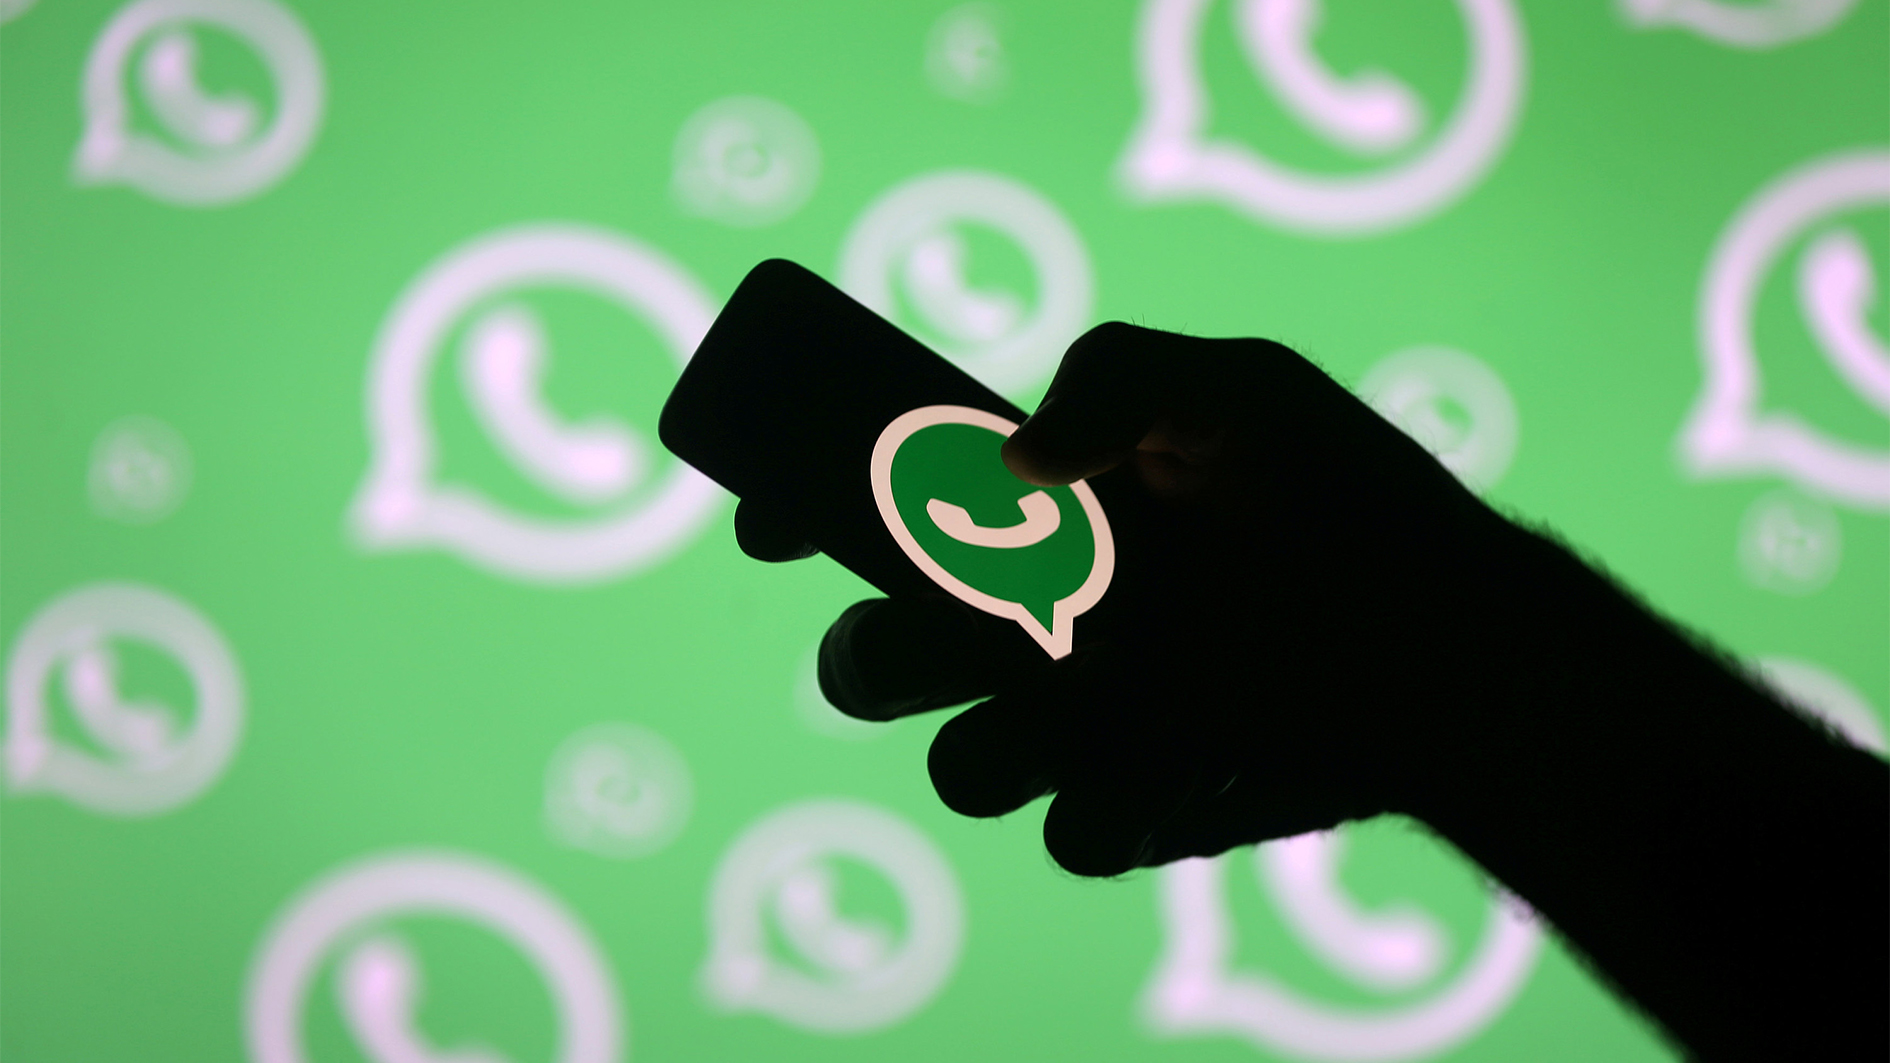 WhatsApp é acusado de mentir sobre criptografia, mas rebate: “mal-entendido” – Aplicativos e Software